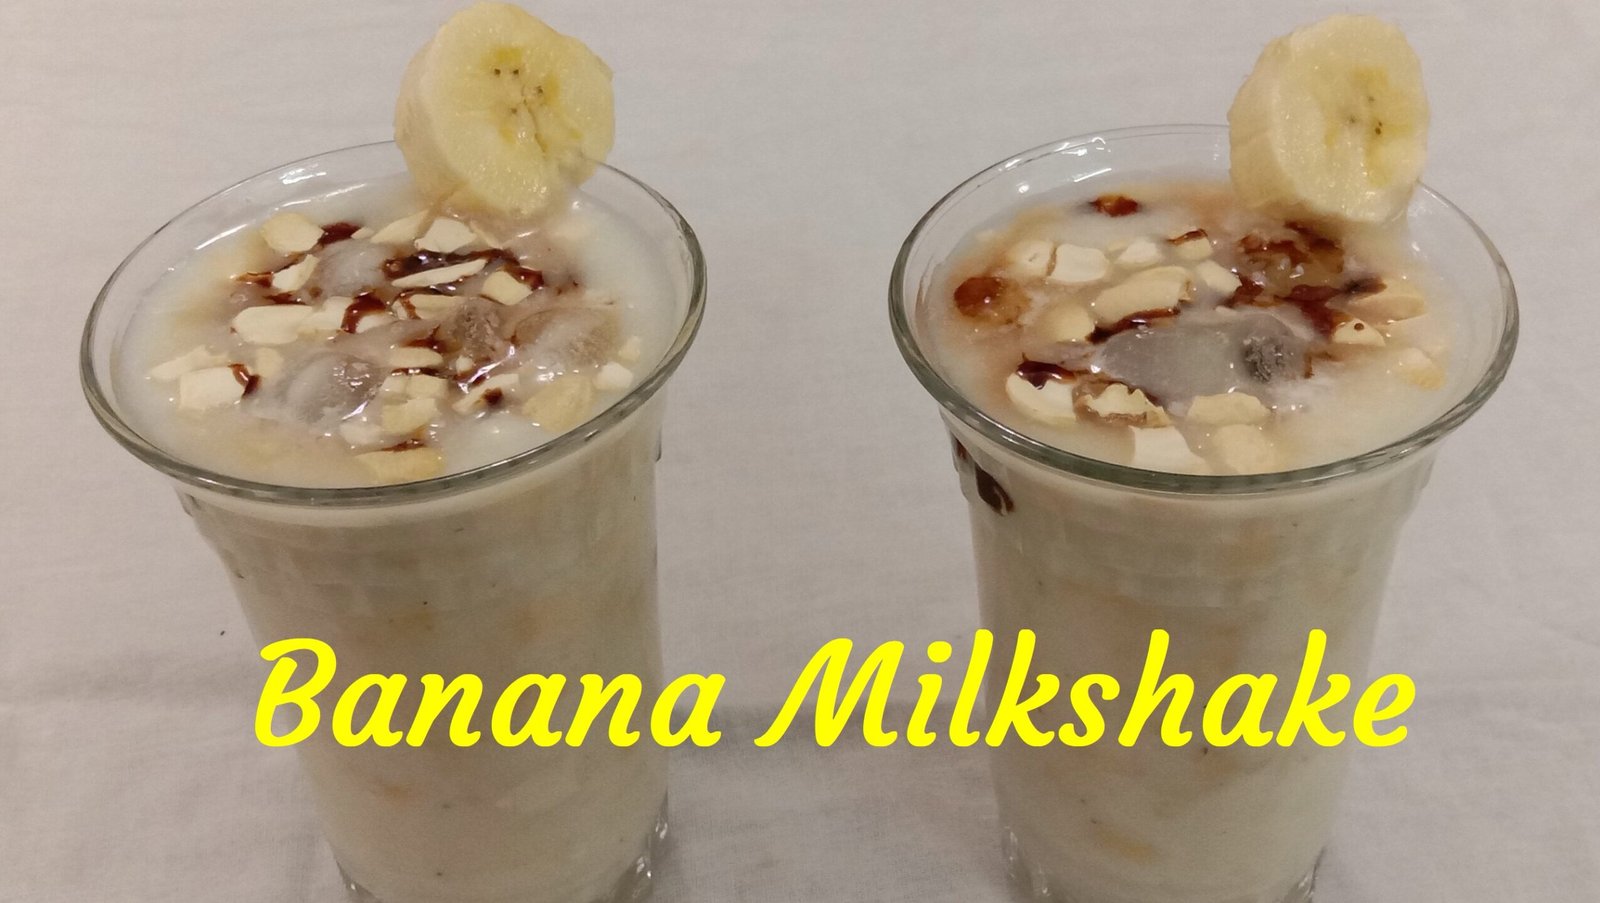 Banana Milkshake with topping in glass, Banana milkshake.